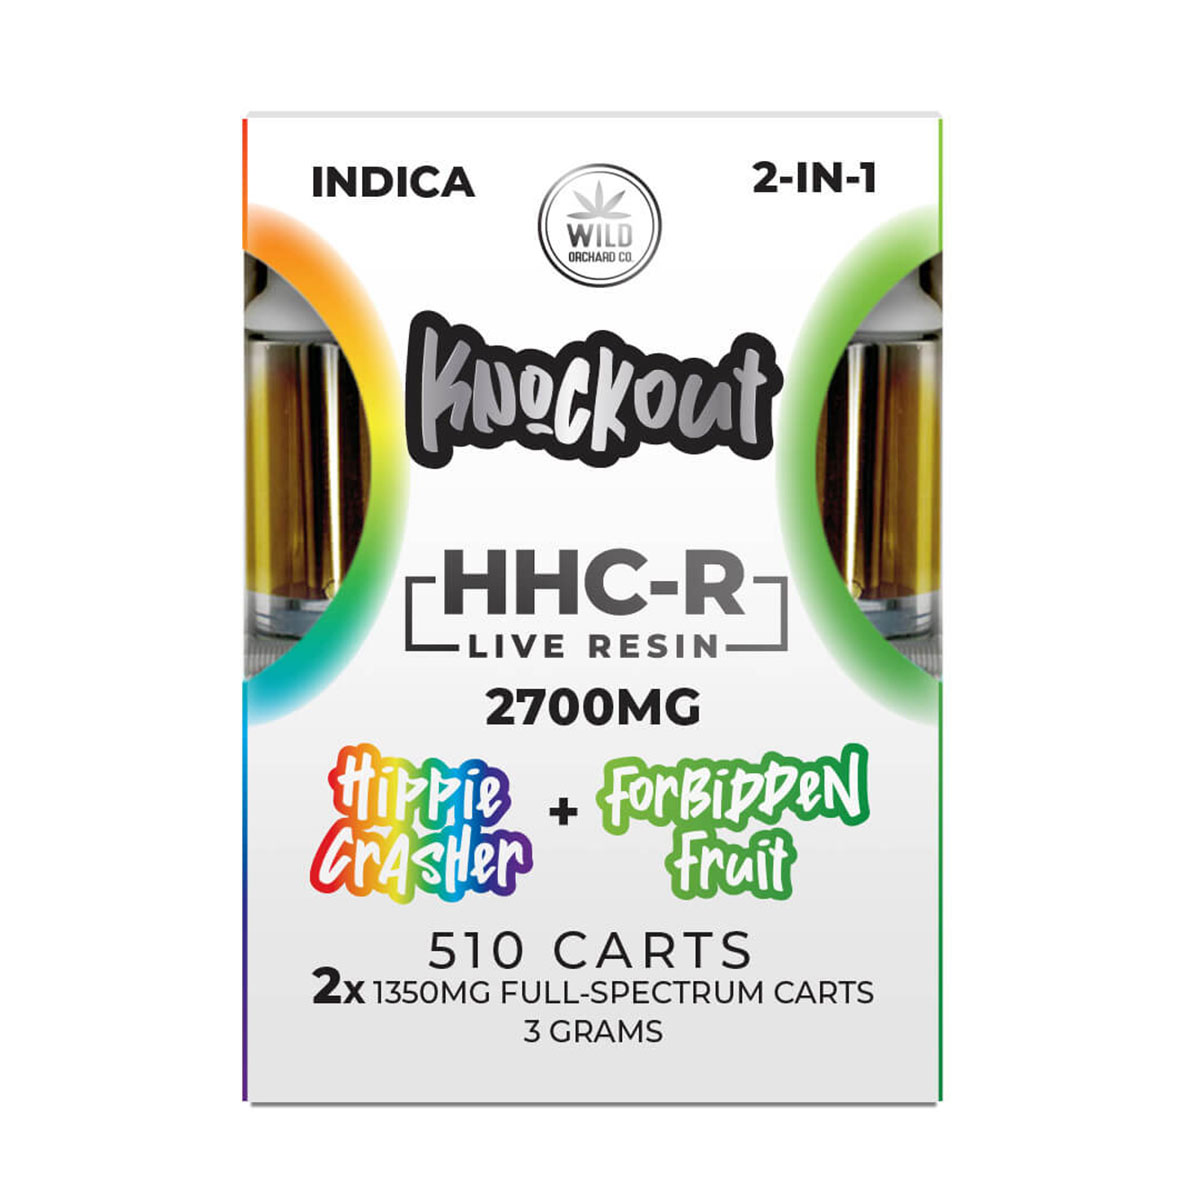 Wild Orchard Live Resin HHC-R Cartridge - Hippie Crasher & Forbidden Fruit 2700mg 2-in-1